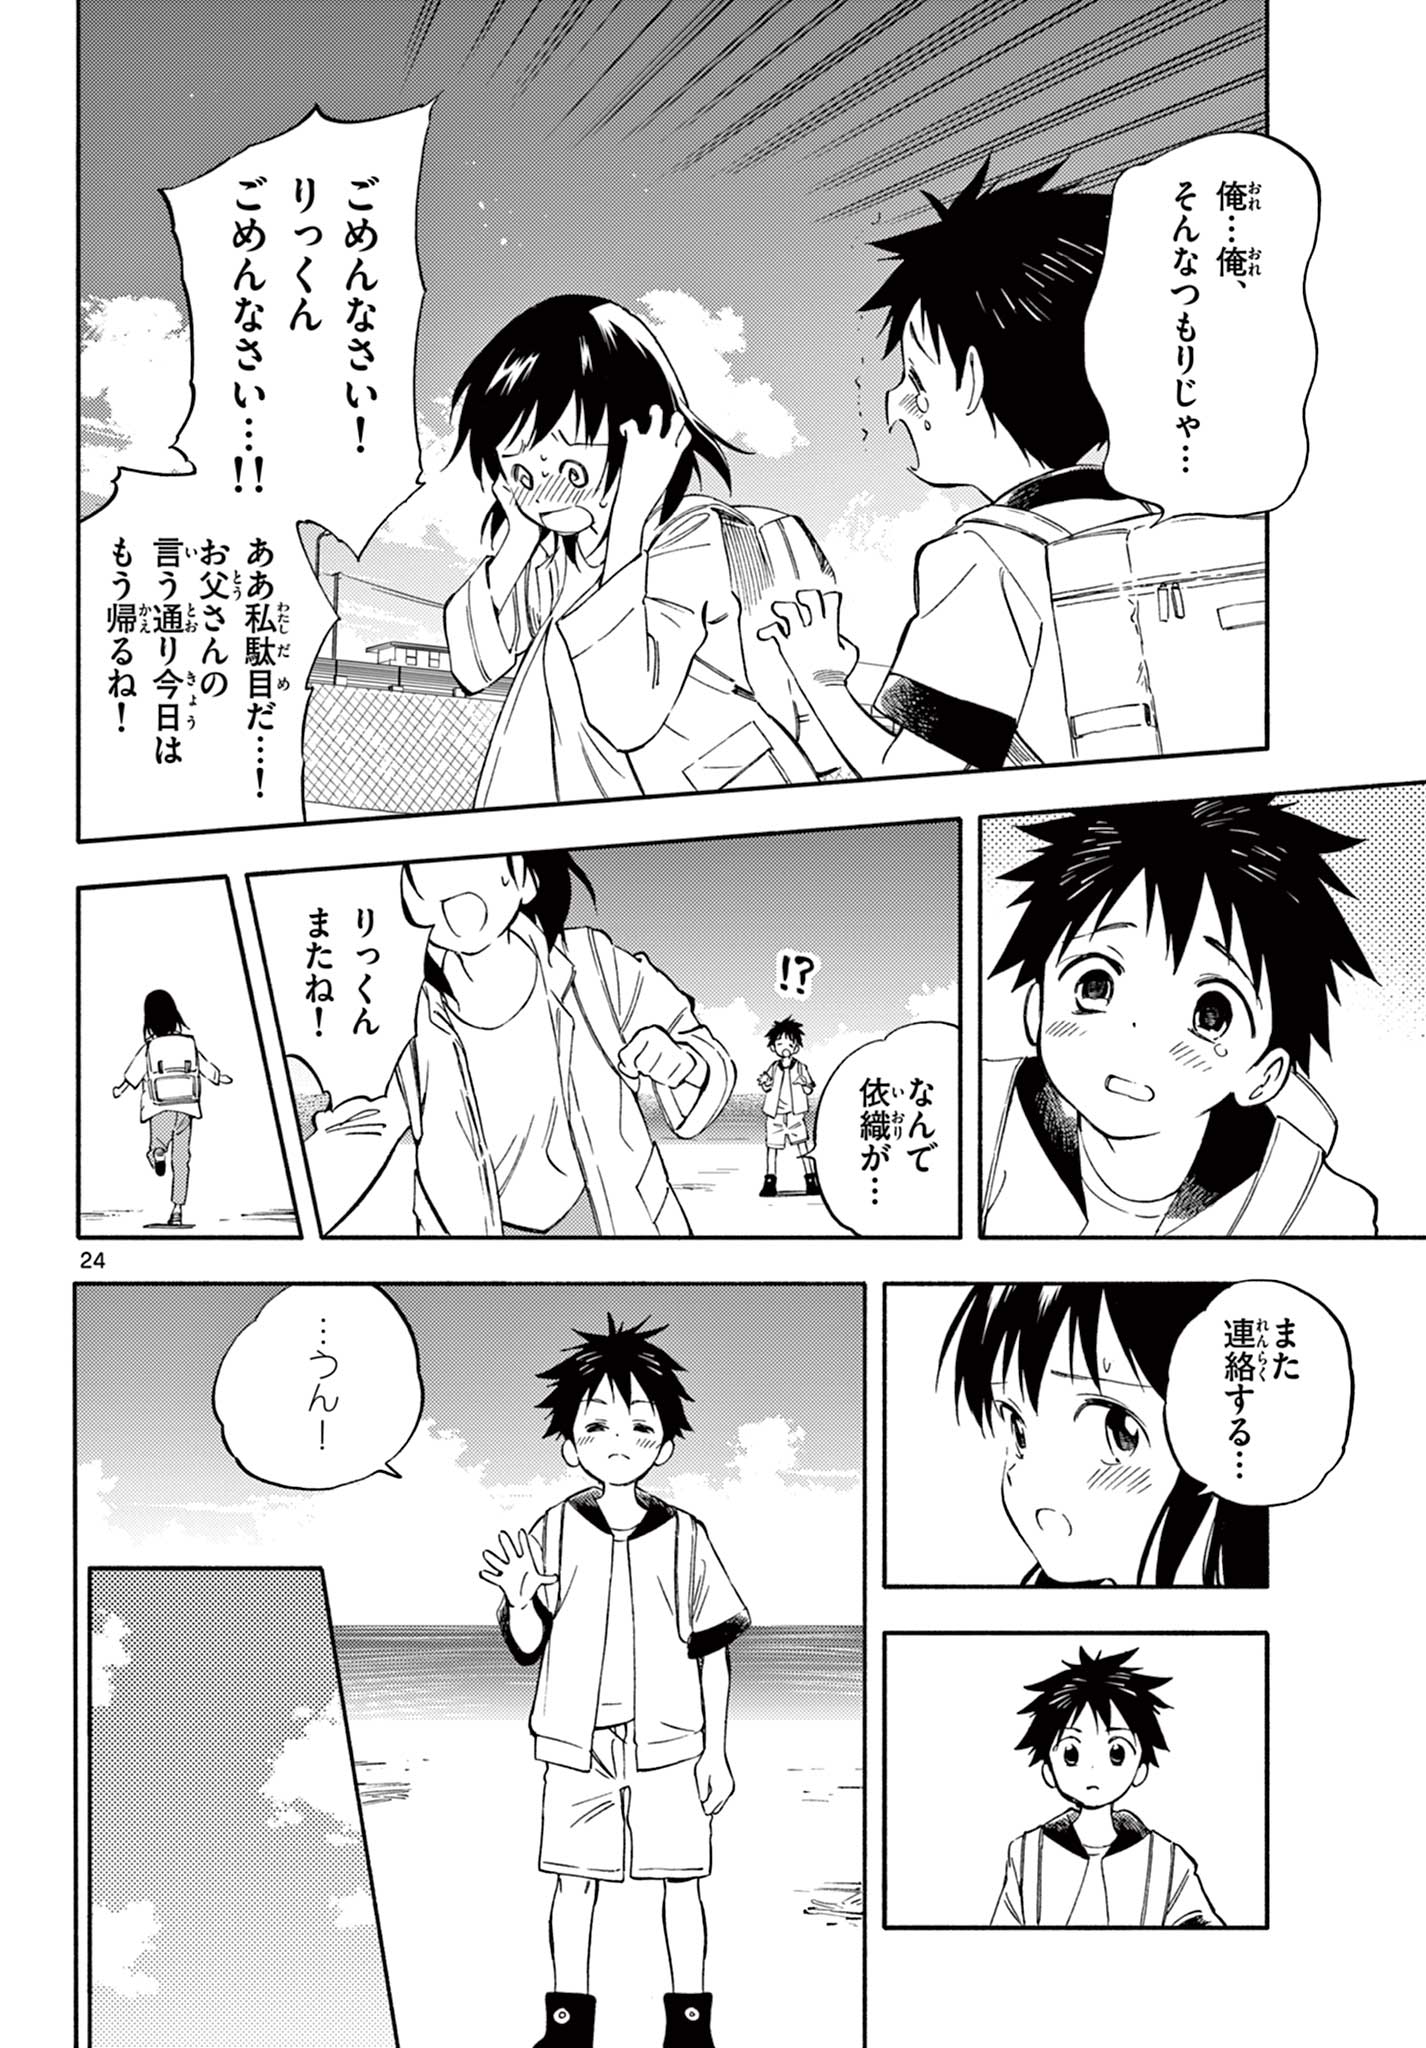 Nami no Shijima no Horizont - Chapter 14.2 - Page 12